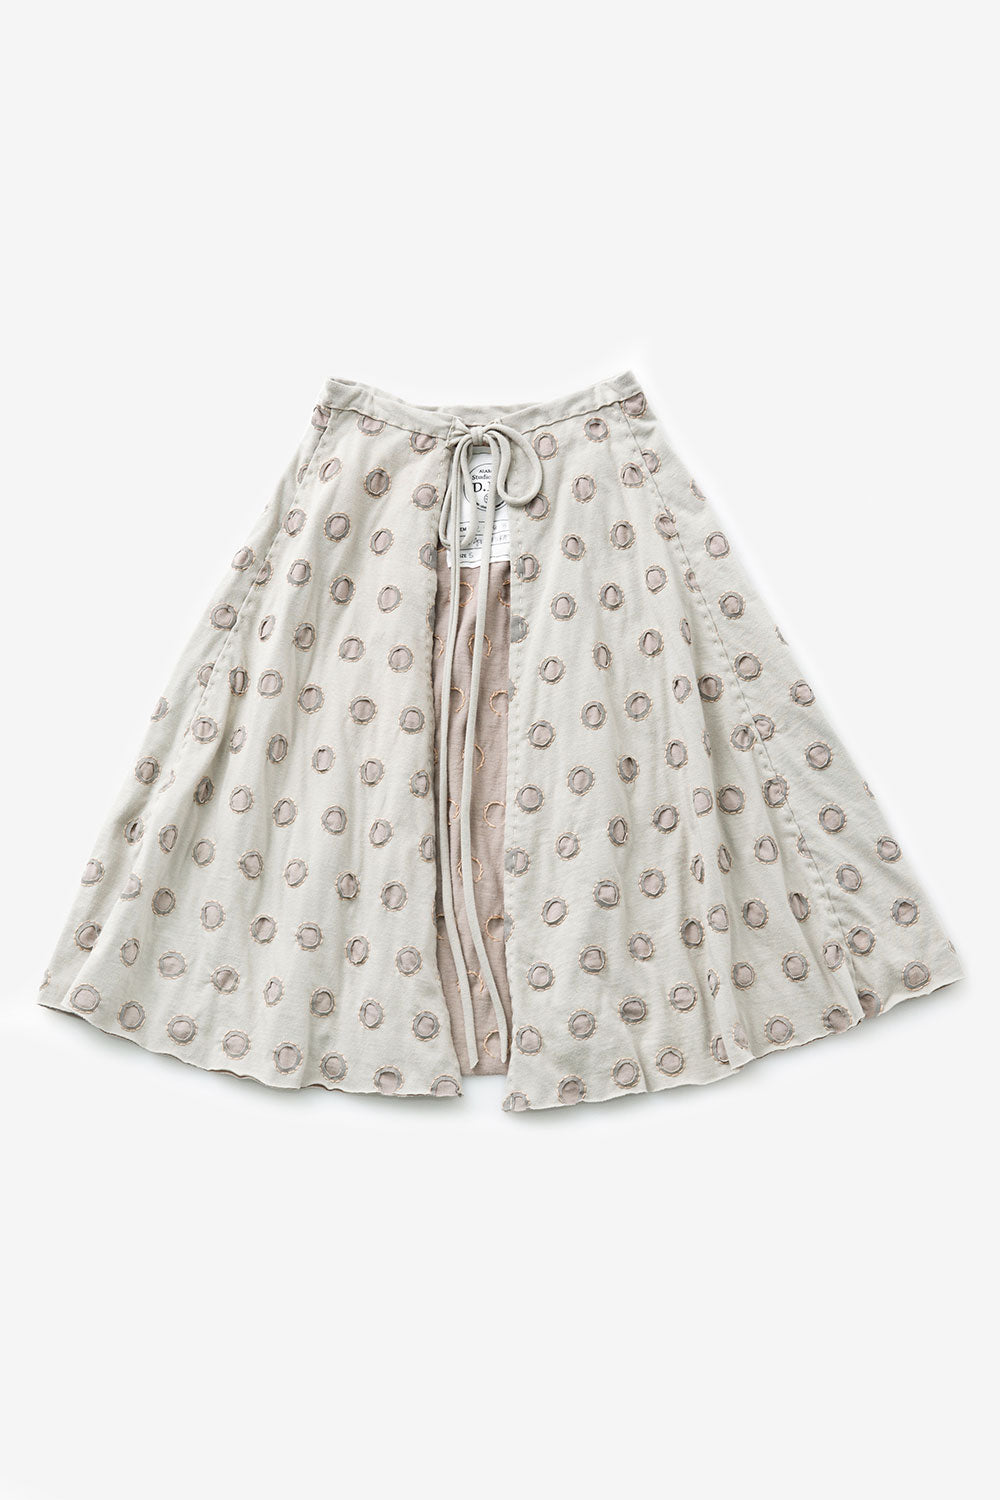 Full Wrap Skirt Pattern, Skirt Sewing Pattern